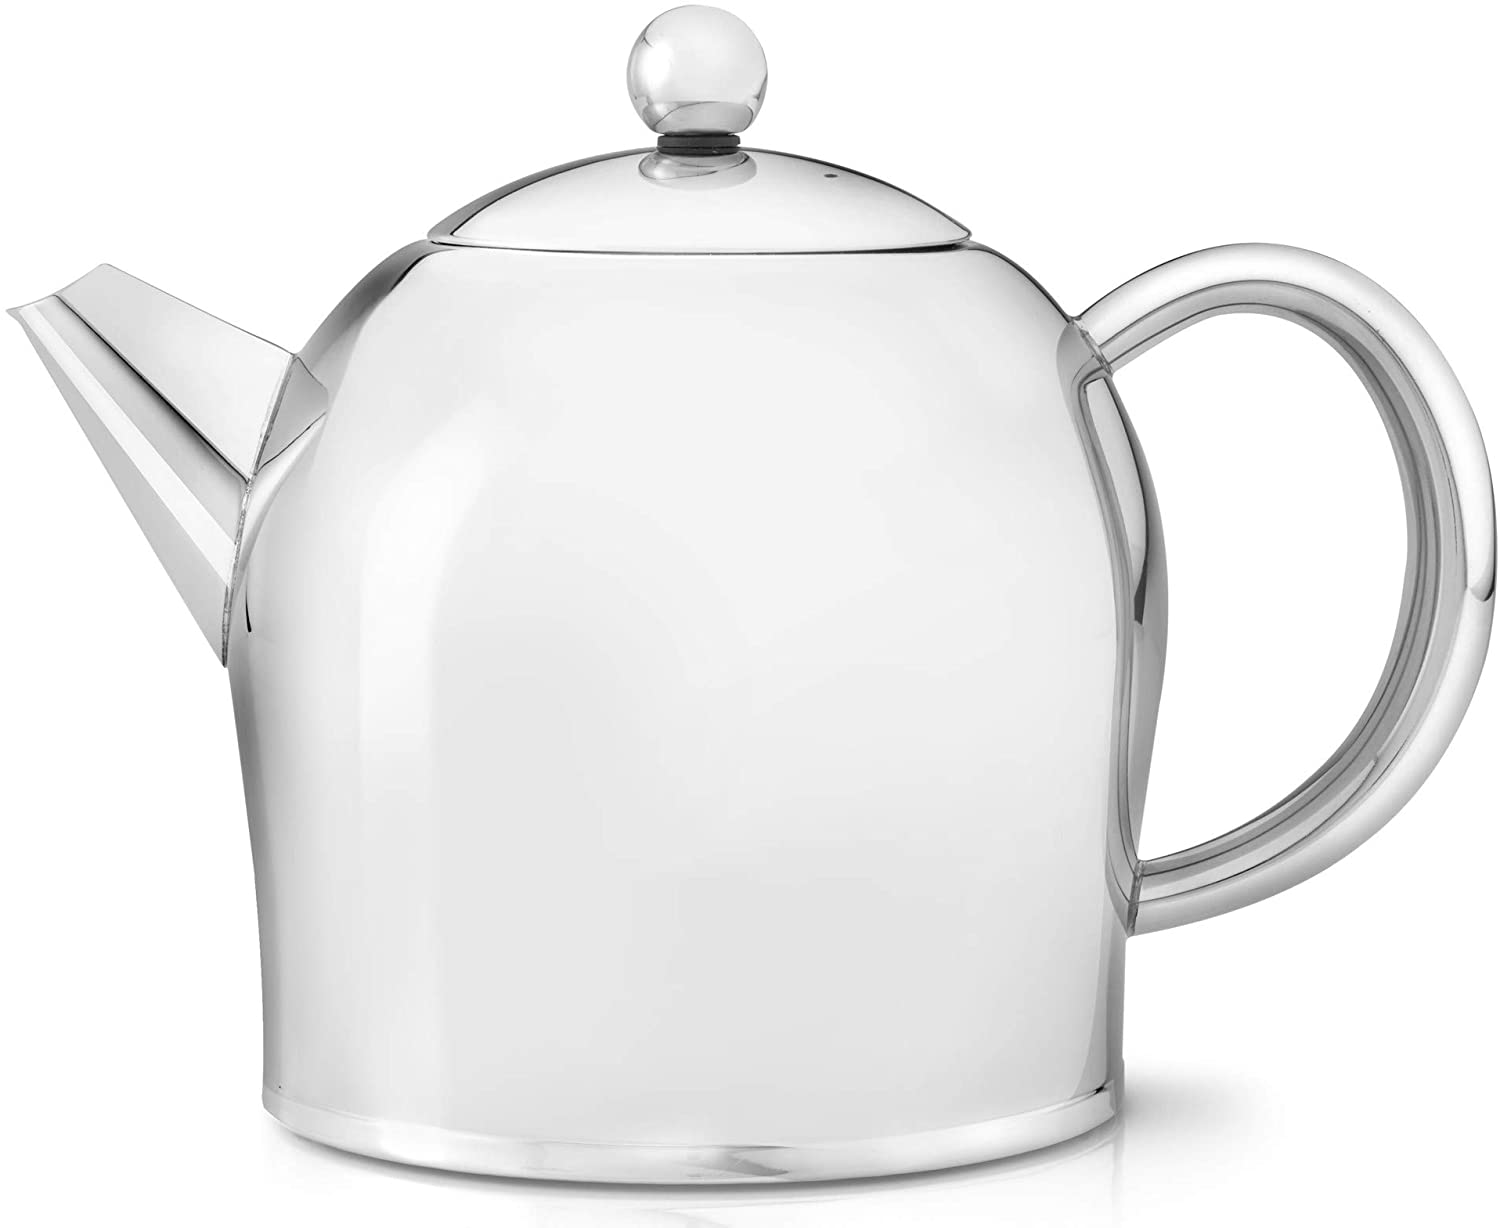 Bredemeijer 1.0 L Shiny Stainless Steel Teapot Santhee, Silver